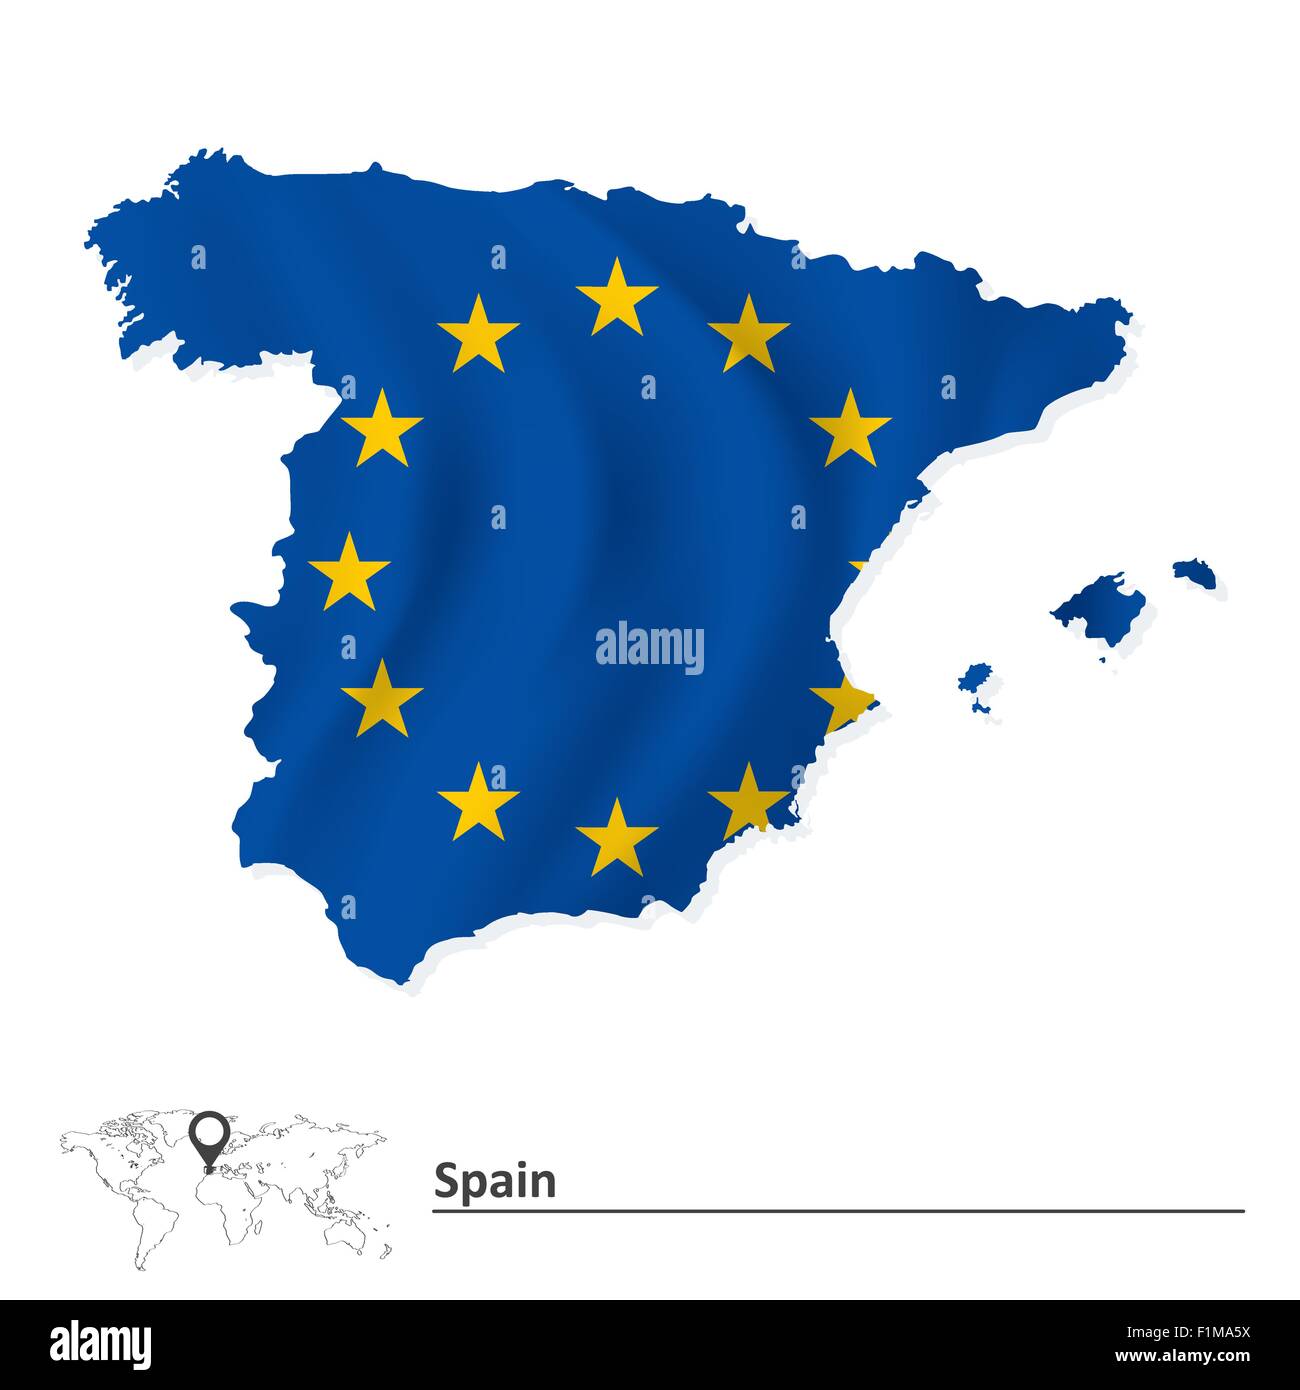 Landkarte von Spanien mit EU-Flagge - Vektor-illustration Stock Vektor